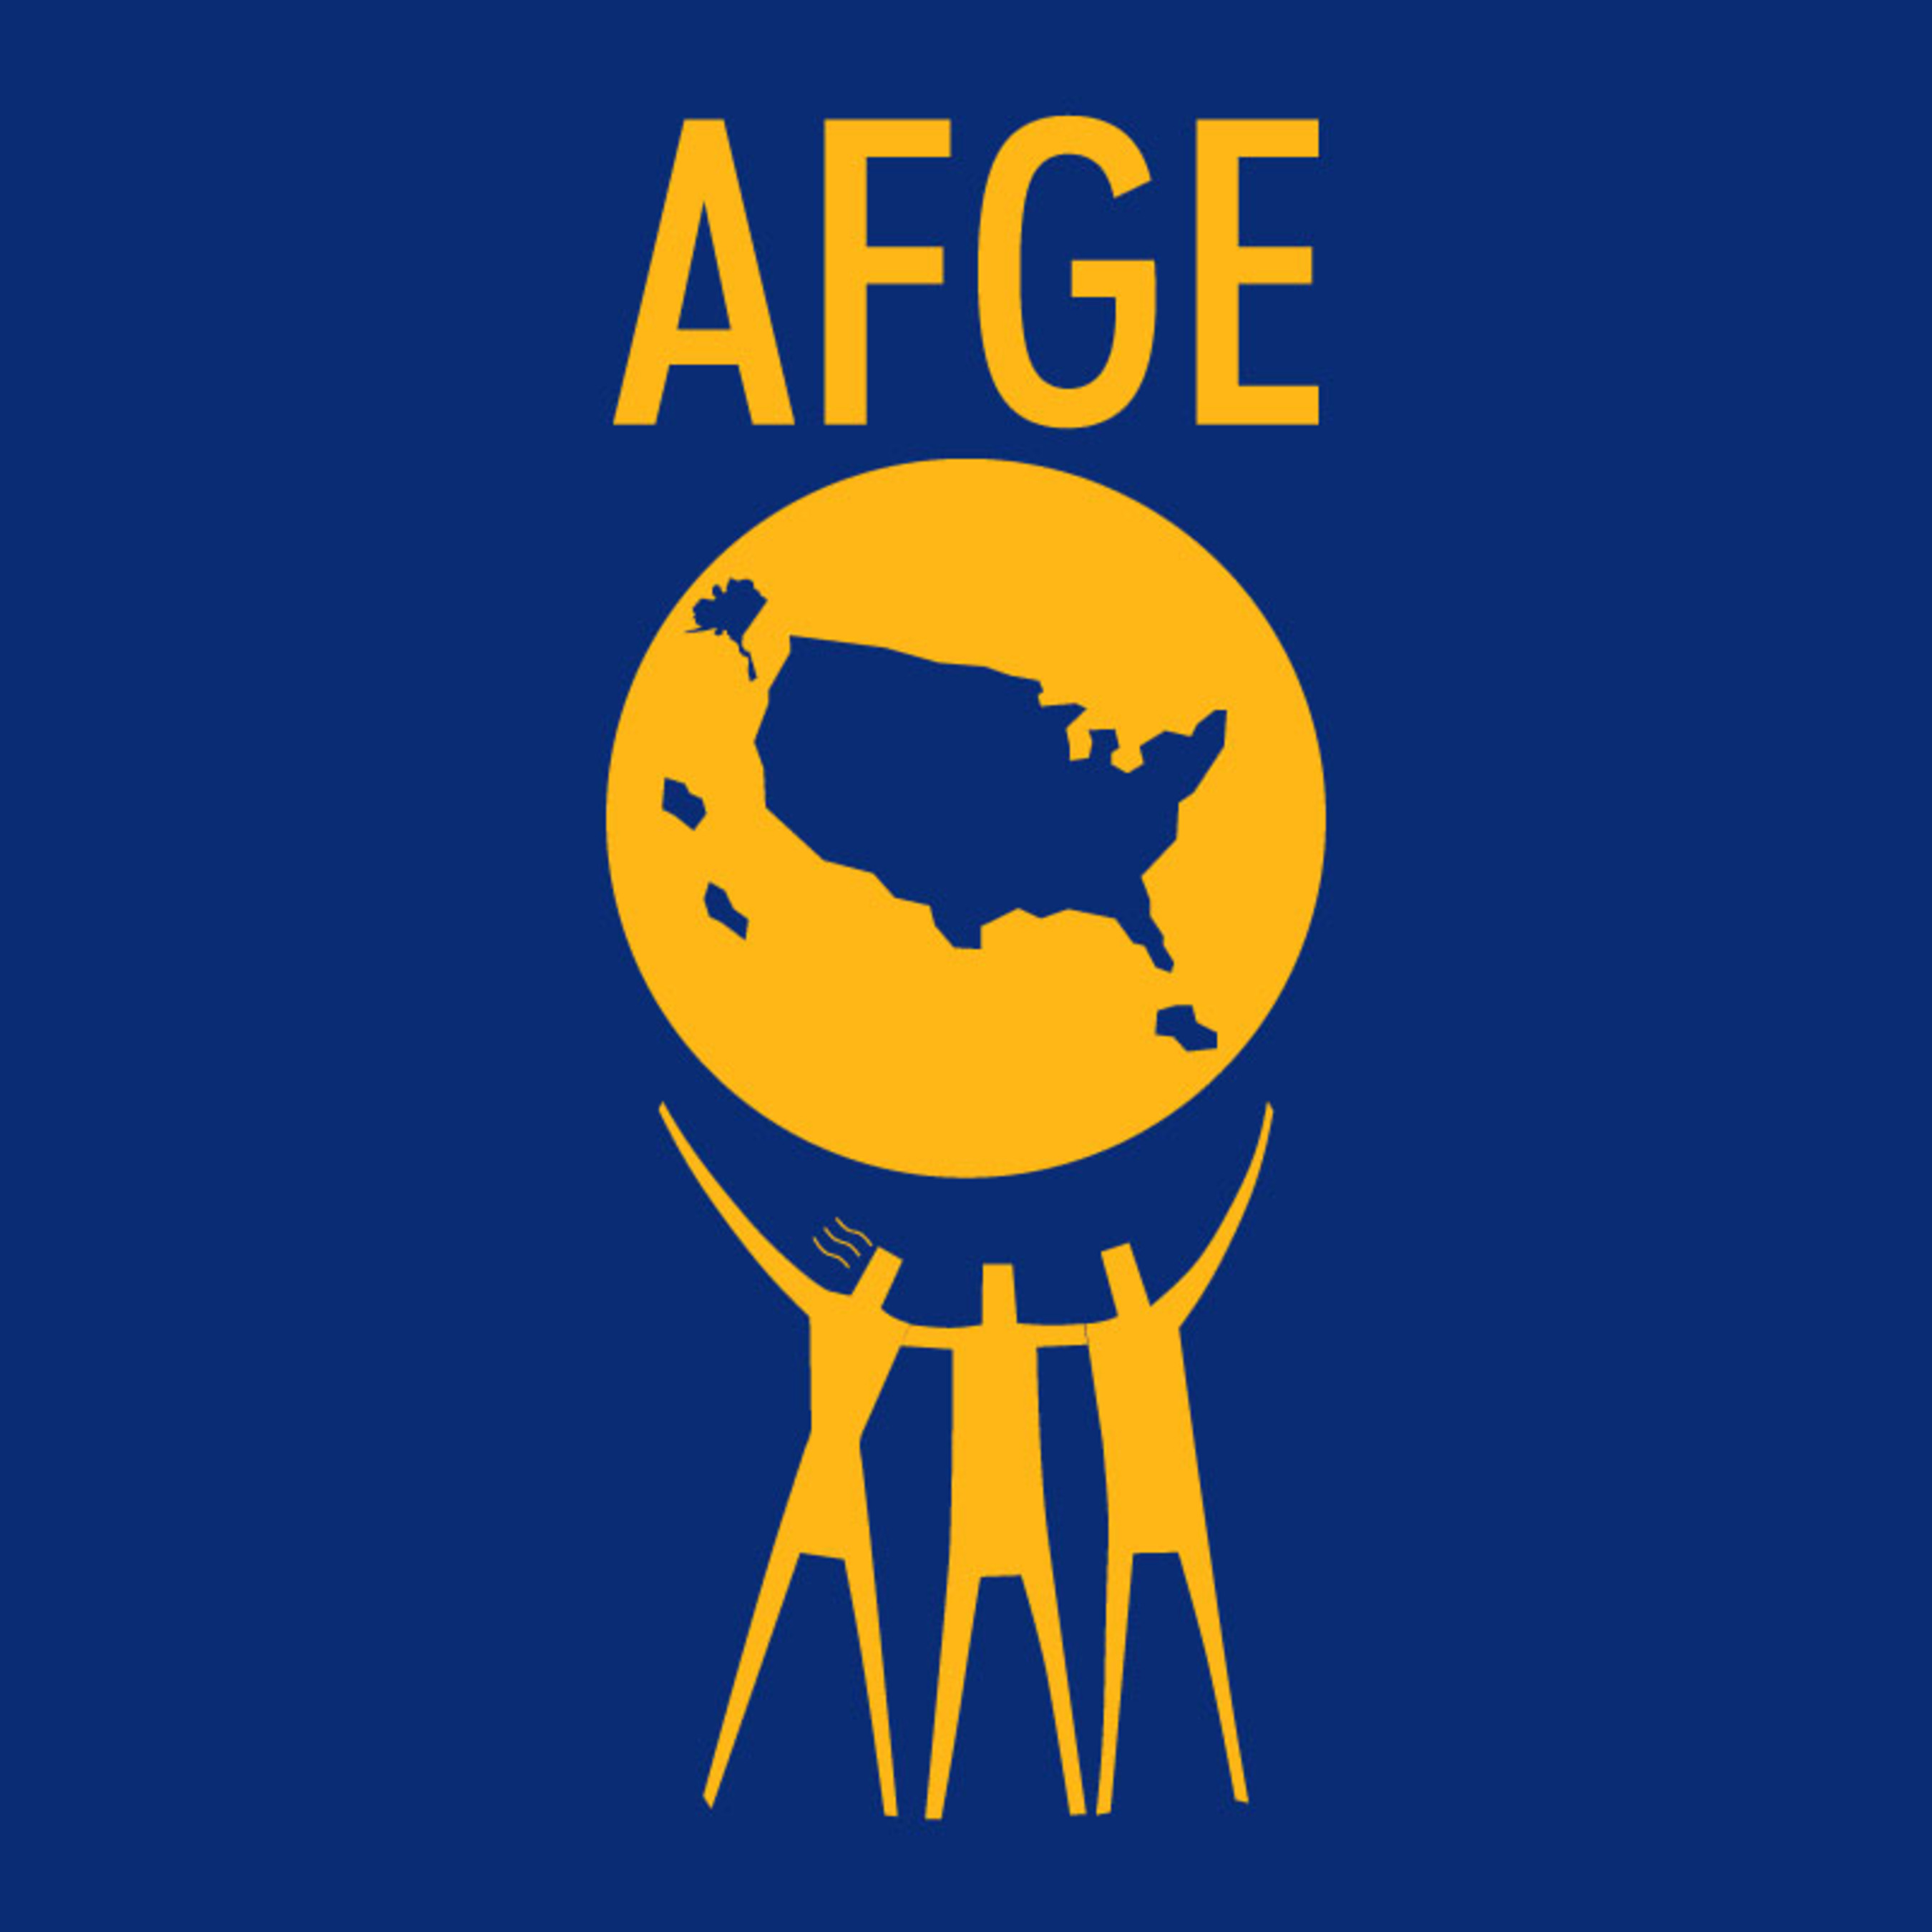 AFGE logo.